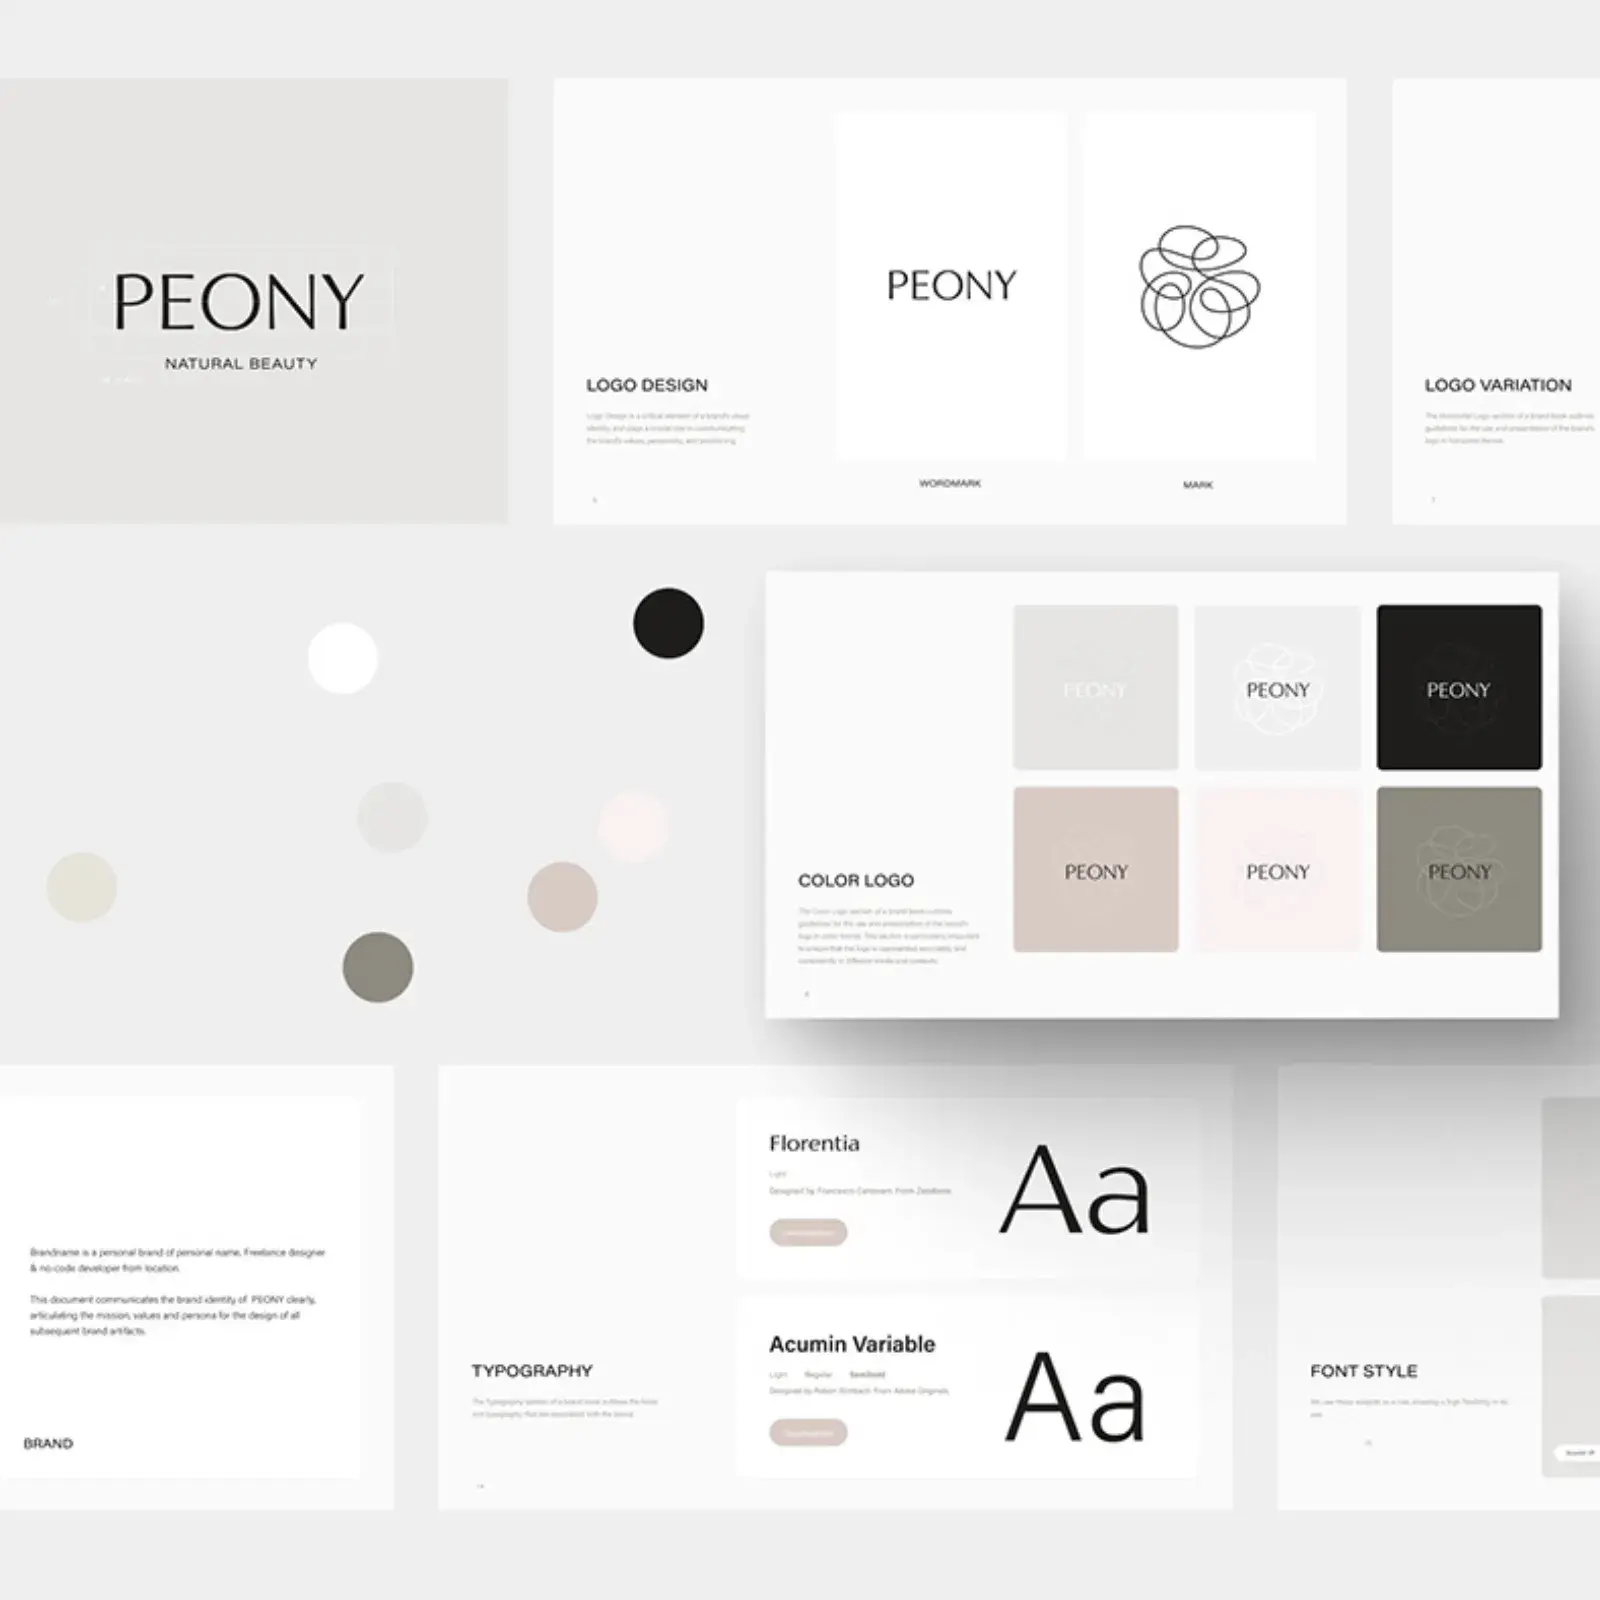 Peony Studio's Branding: Simplicity and Elegance in Design